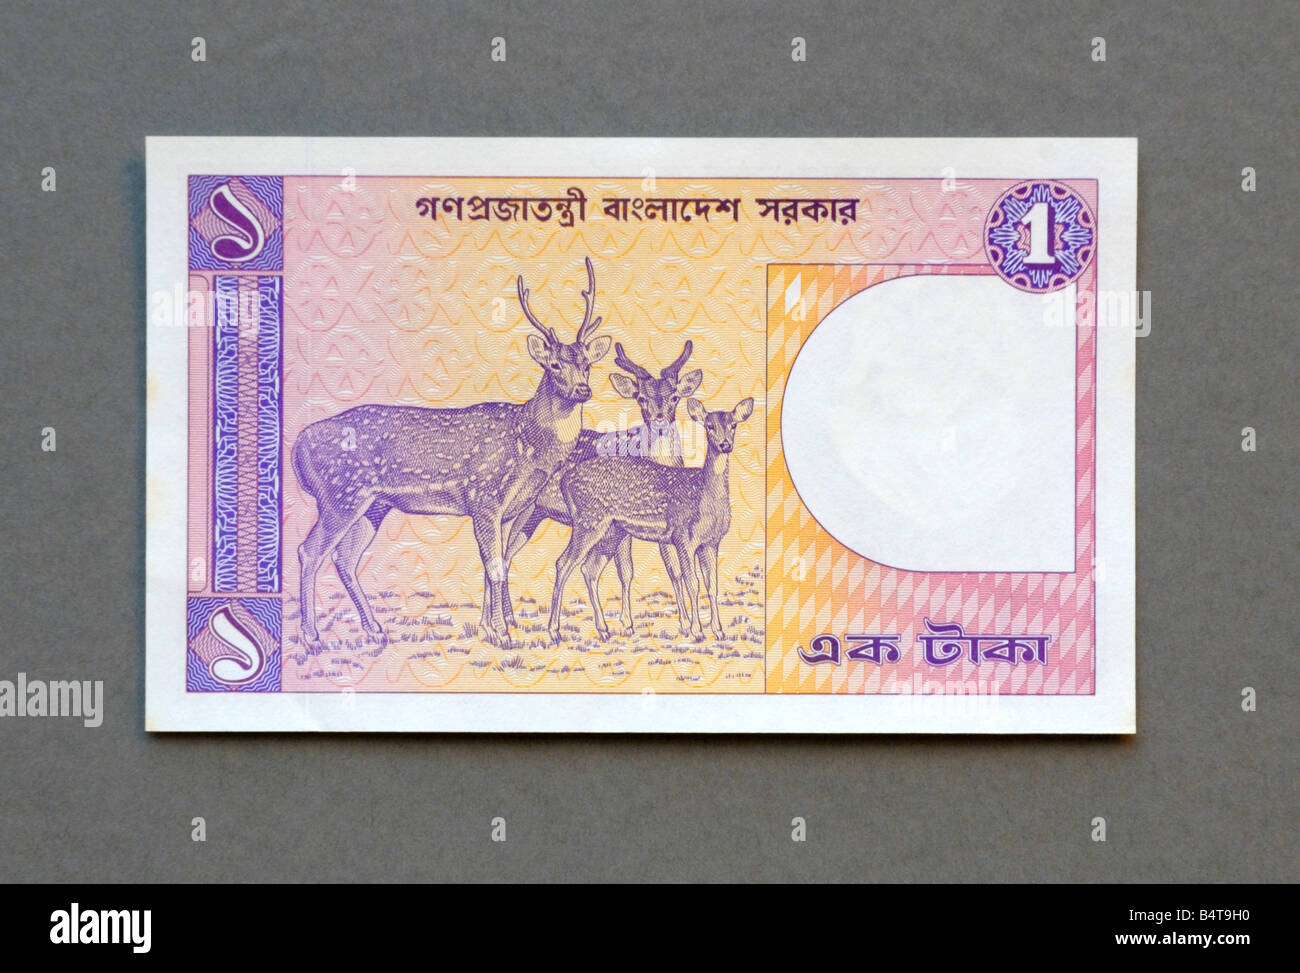 Bangladesh One 1 Taka Bank Note Stock Photo